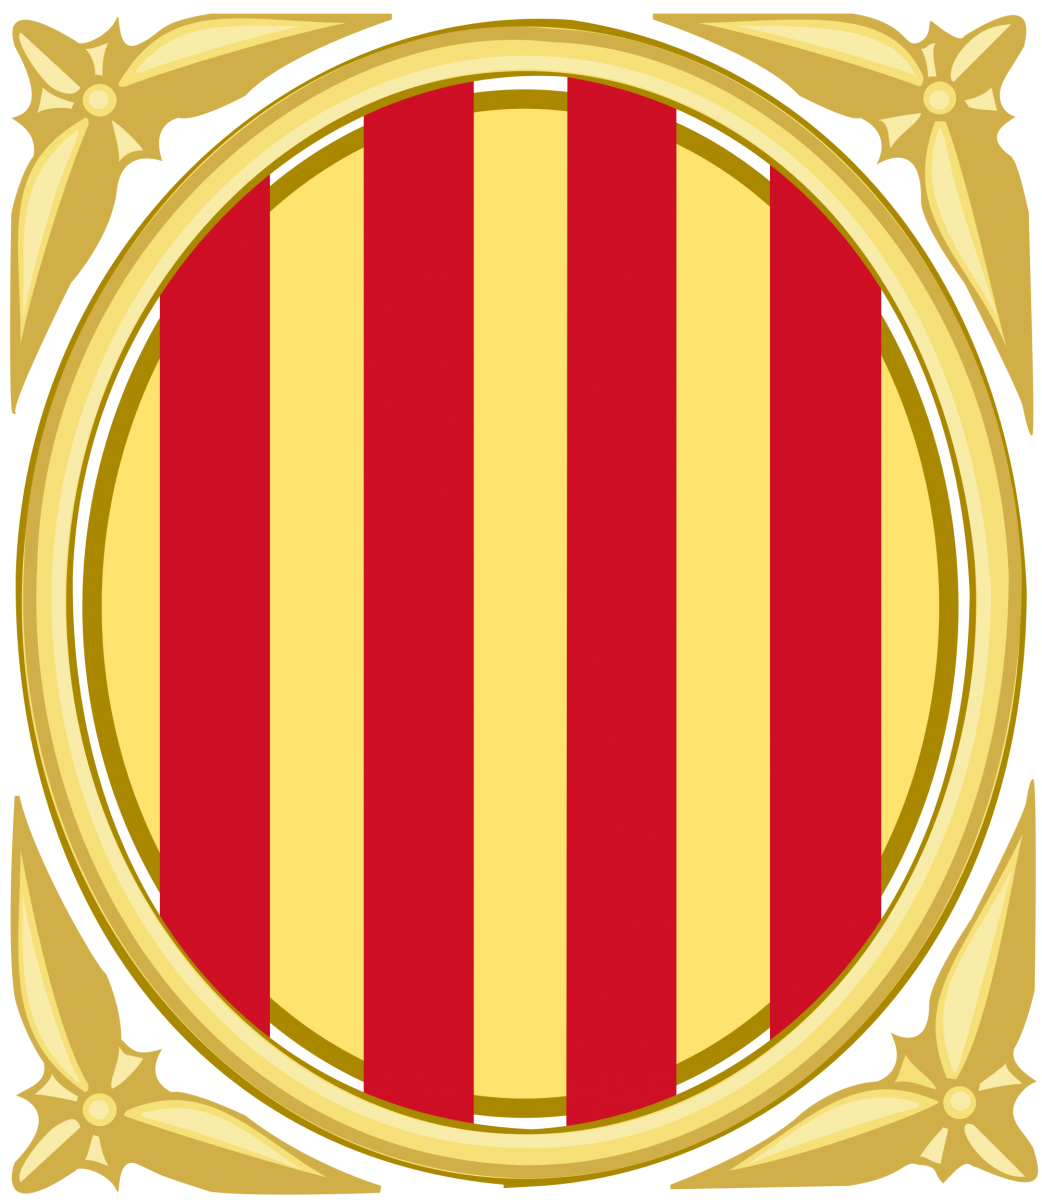 The Seal of the Generalitat de Catalunya.